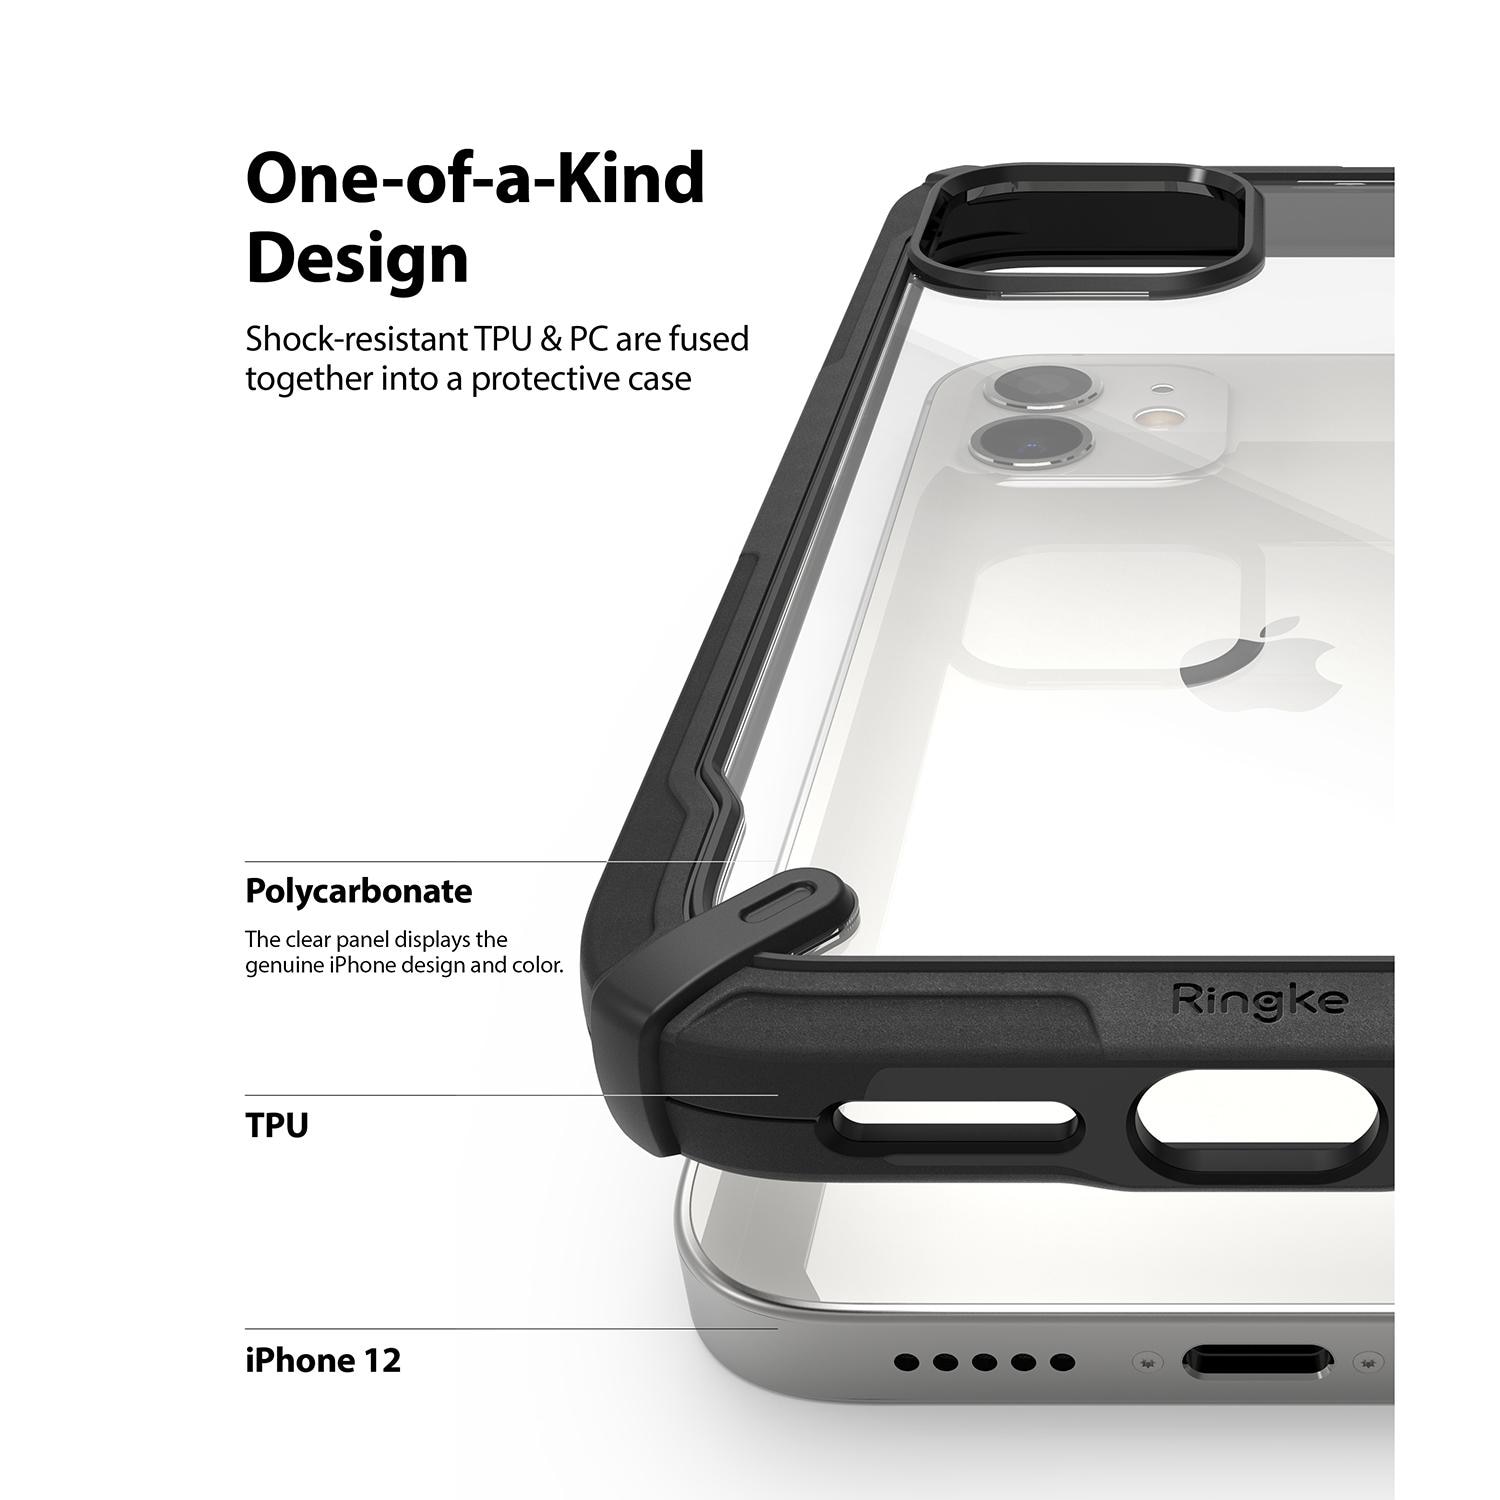 iPhone 12/12 Pro Fusion X Skal, svart/genomskinlig